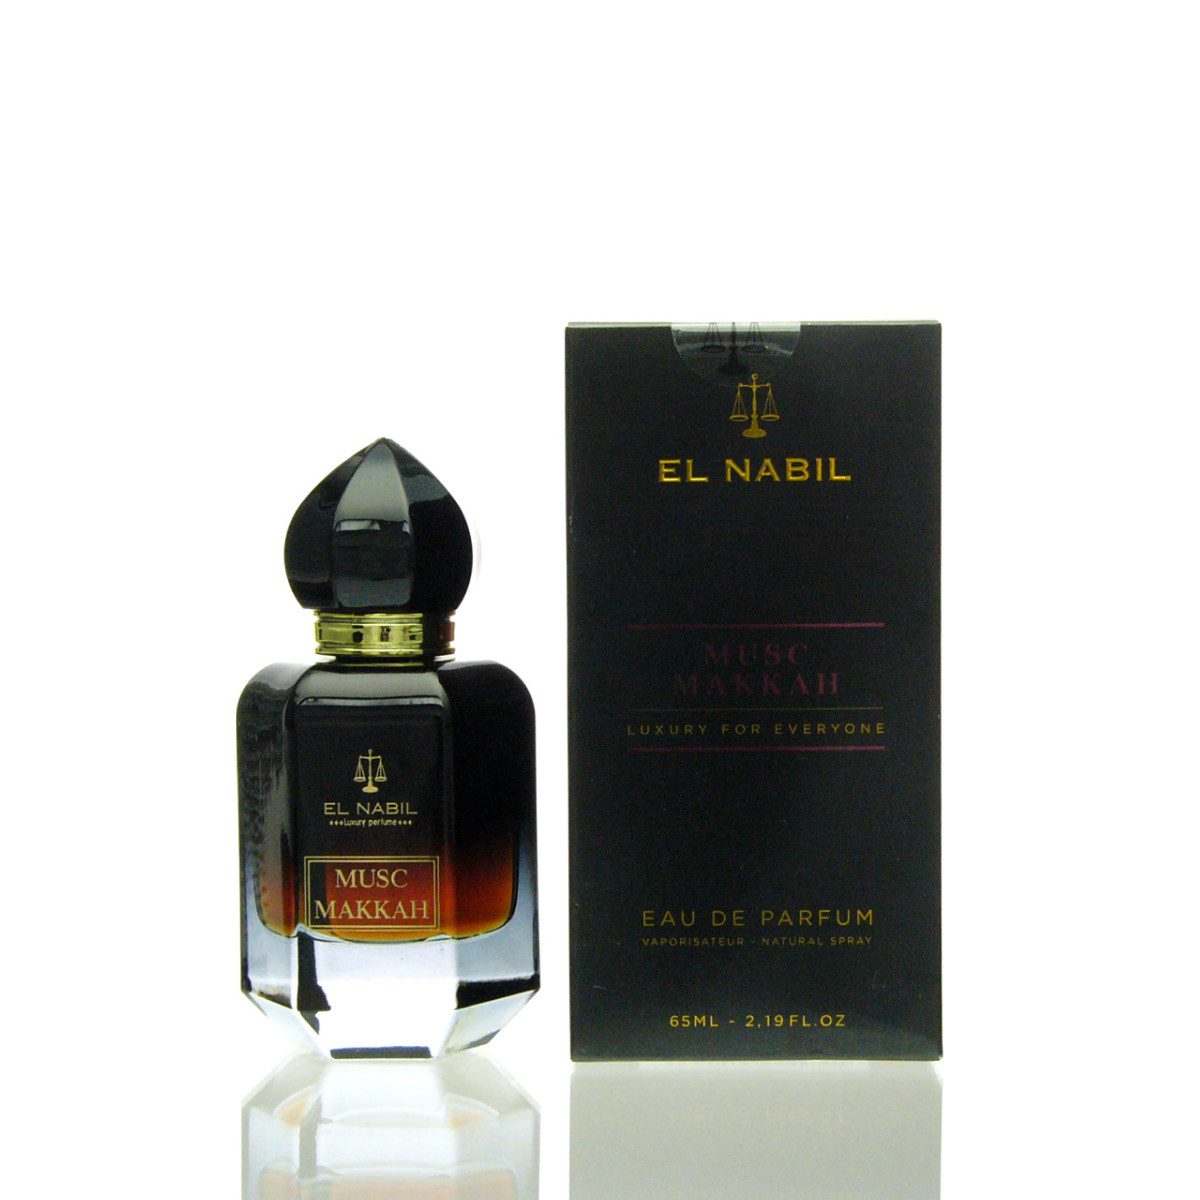 El Nabil Eau de Parfum El Nabil Musc Makkah Eau de Parfum 65 ml